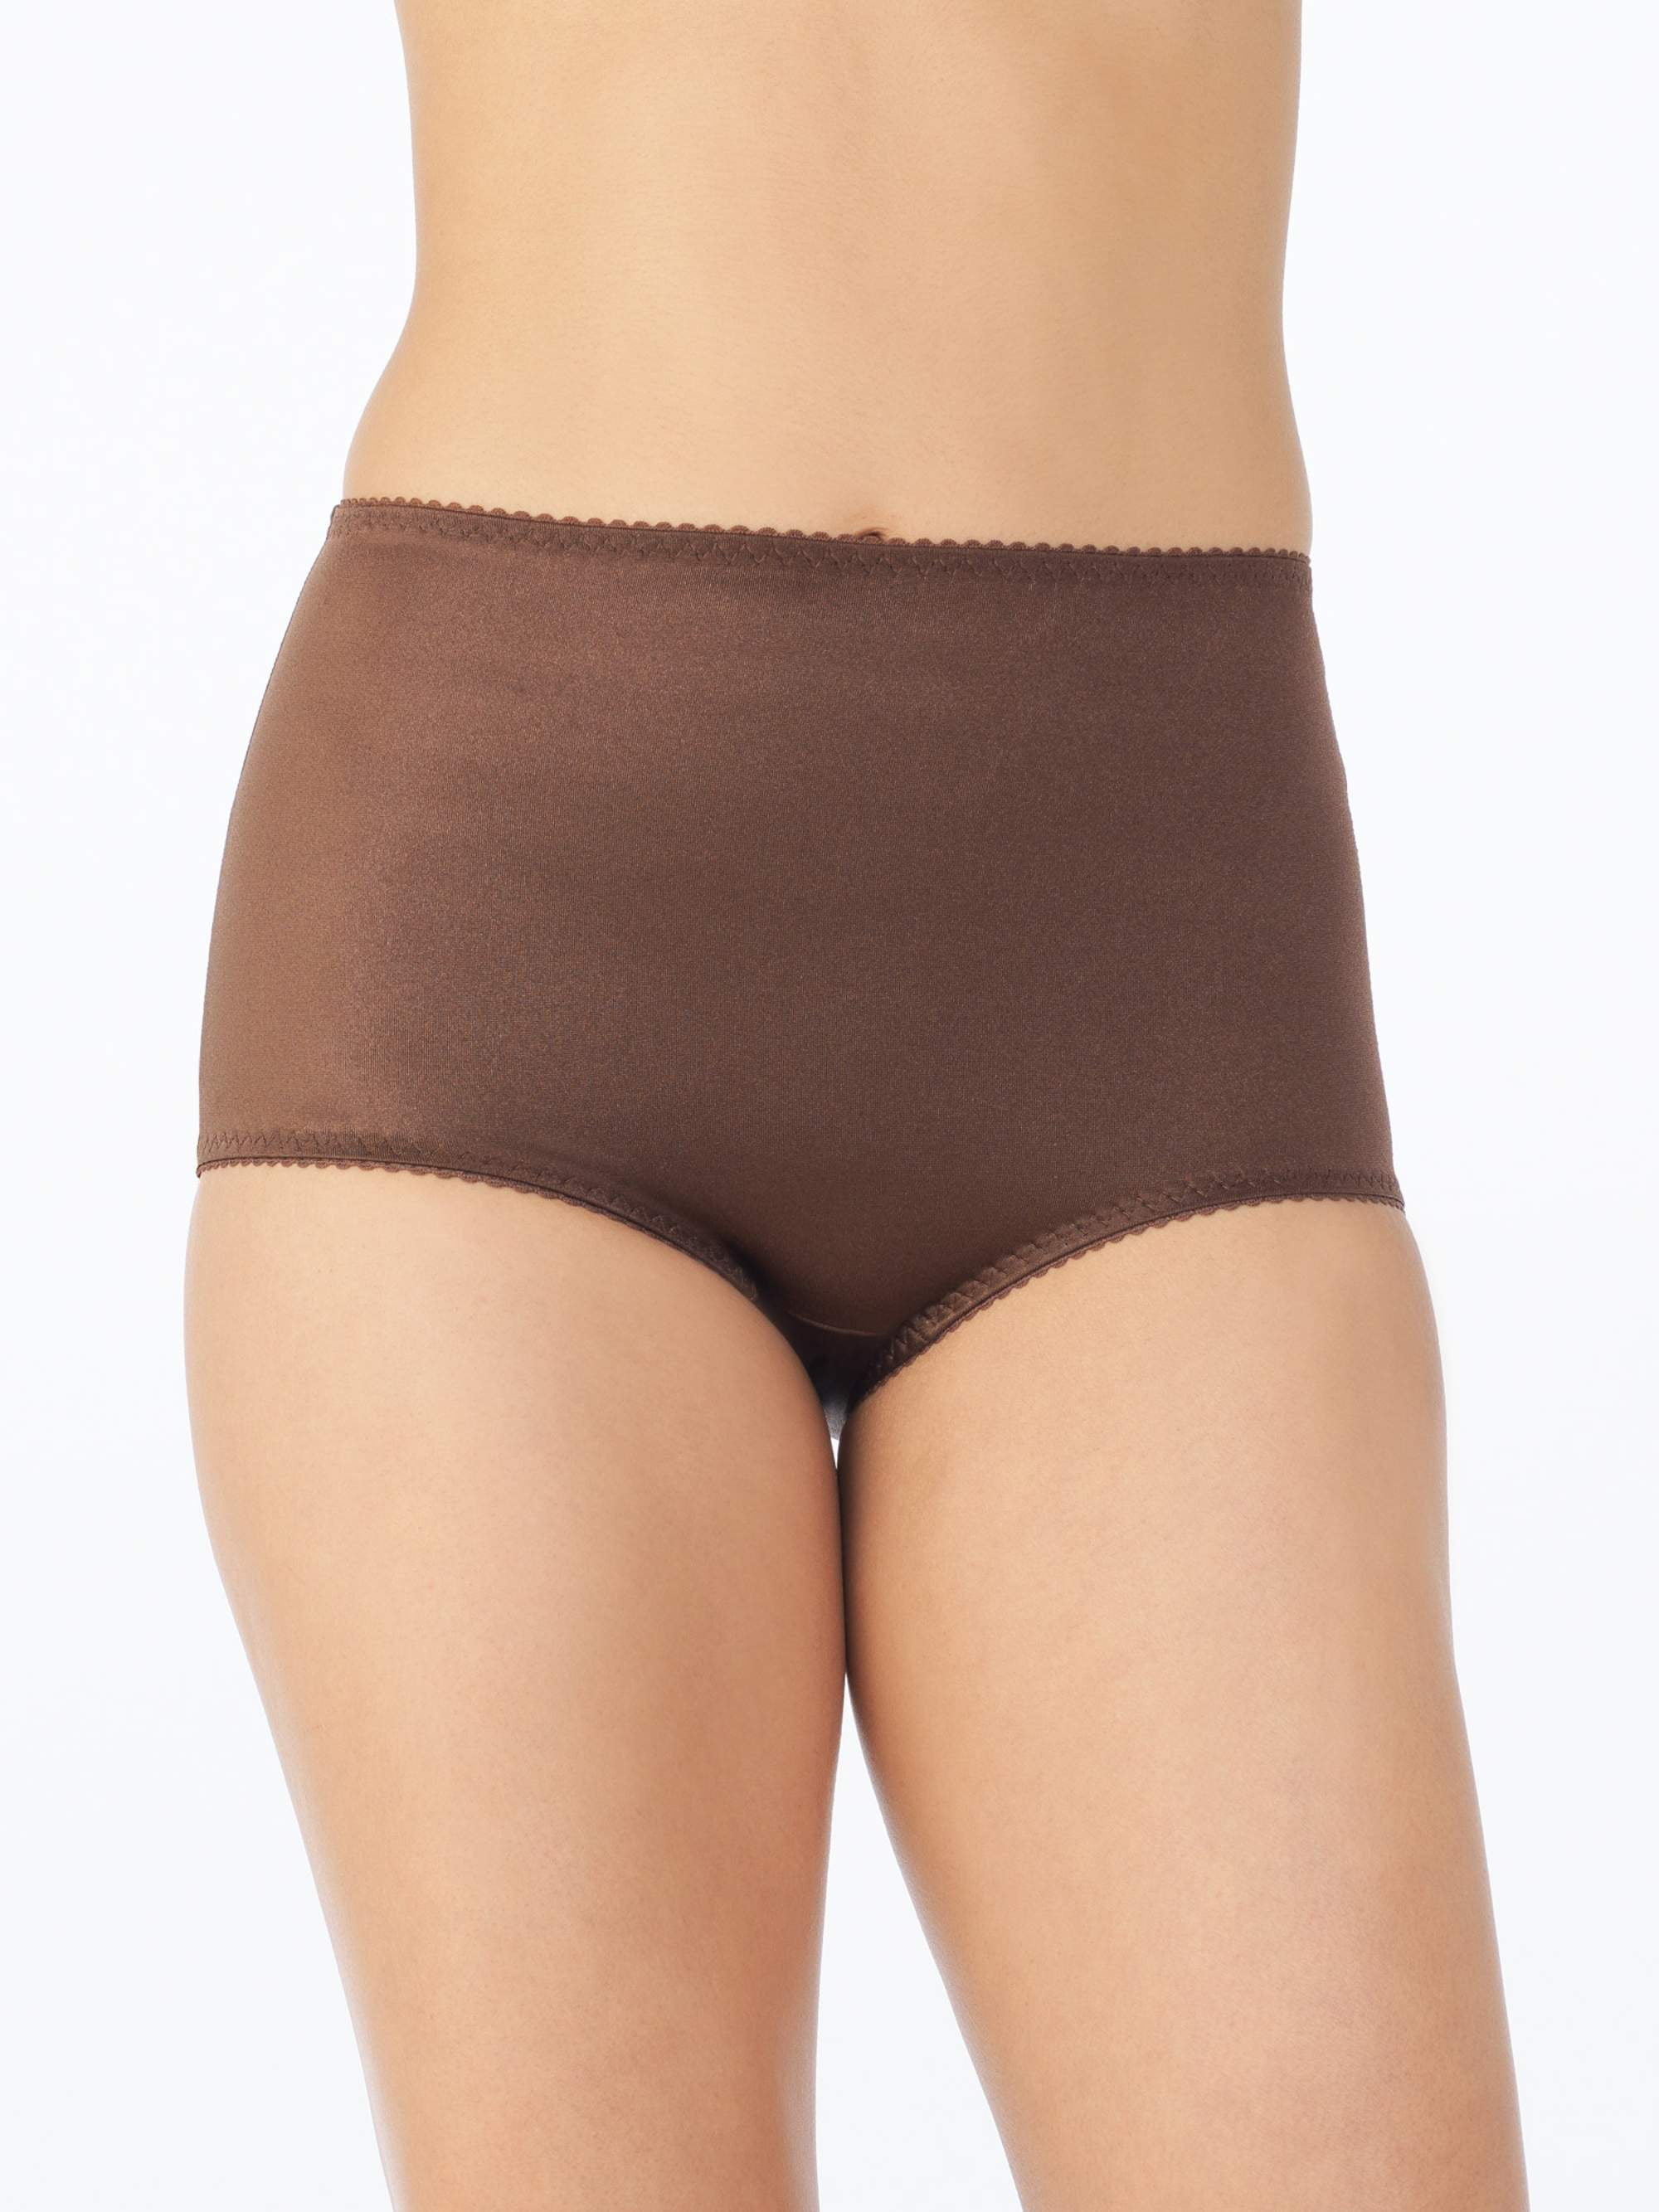 Women's Vassarette 40001 Undershapers Smoothing & Shaping Brief Panty  (Chocolate Kiss M)